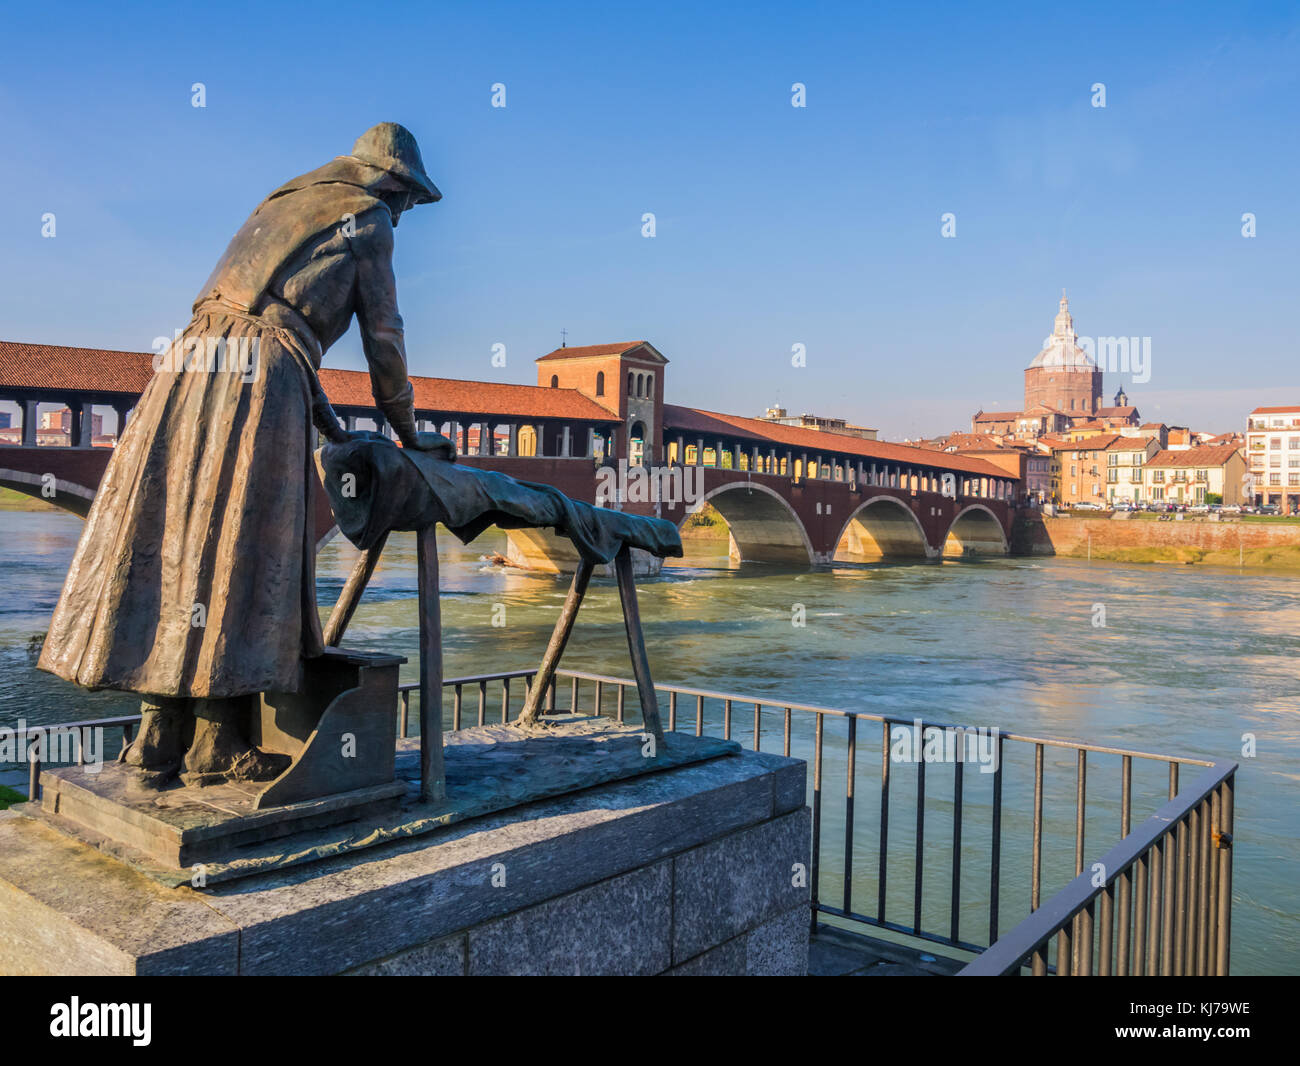 Laundress statue and Covered Bridge, Pavia, Italy Stock Photo